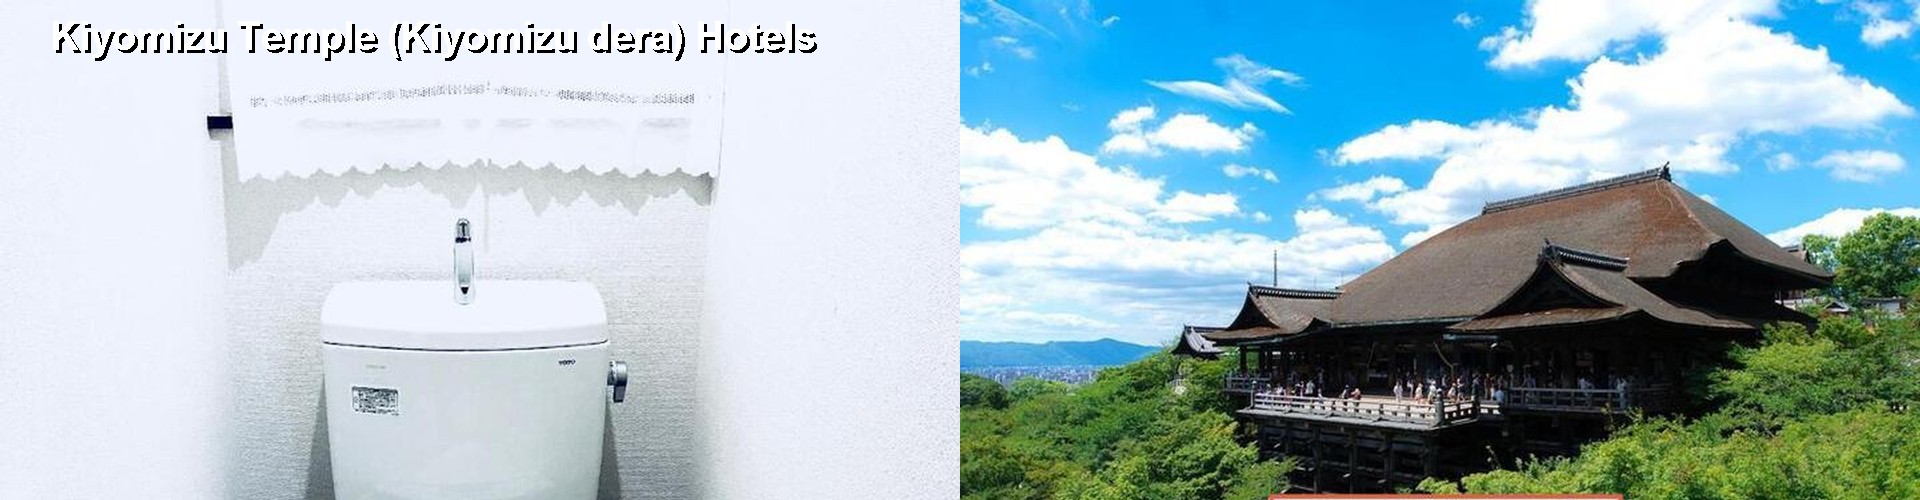 3 Best Hotels near Kiyomizu Temple (Kiyomizu dera)